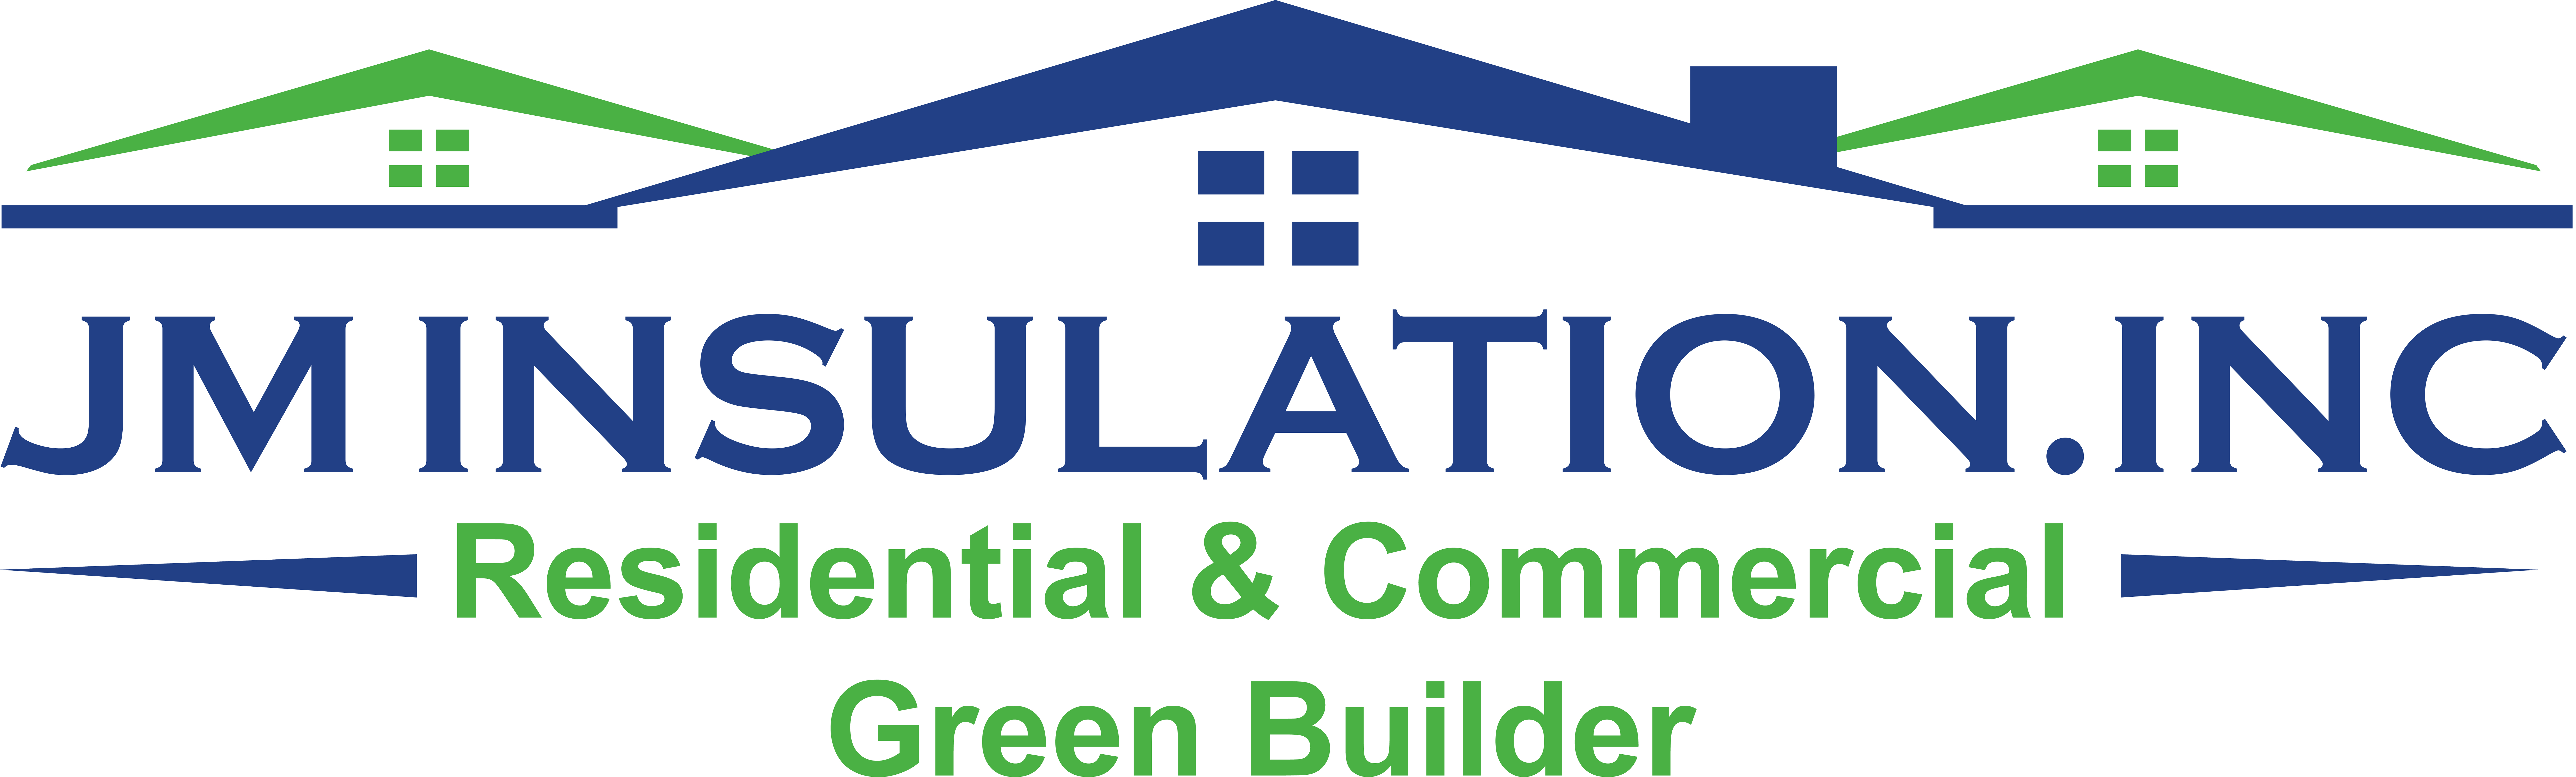 Insulation logo